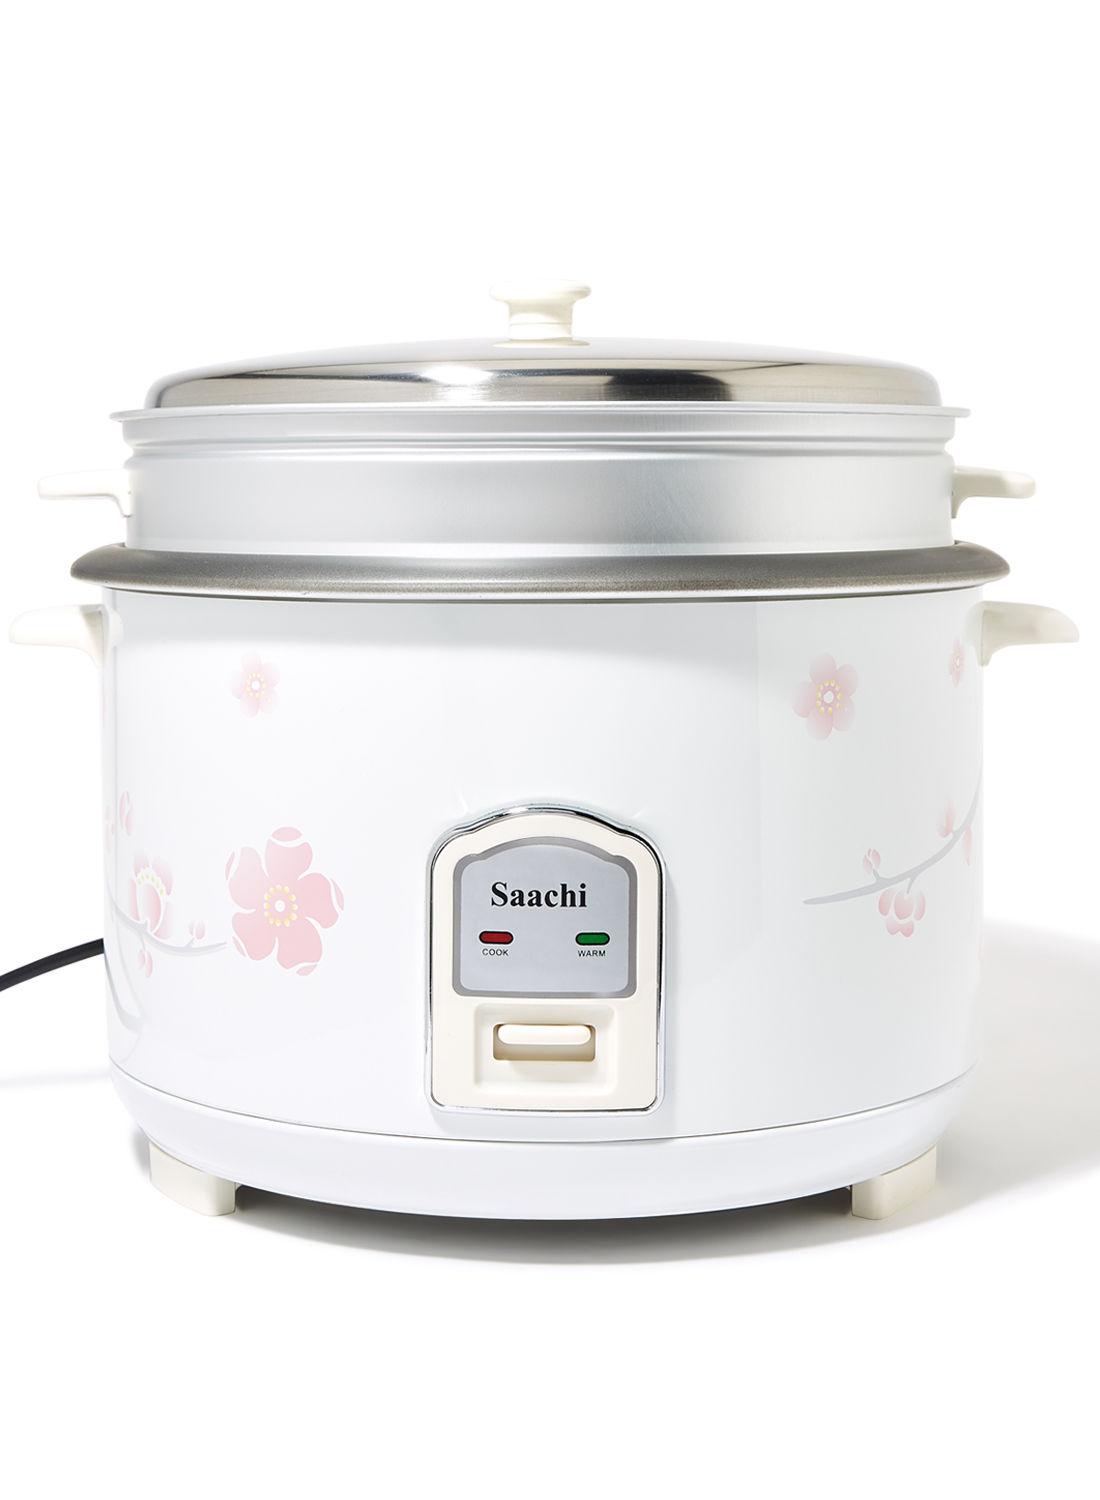 جهاز طبخ الأرز الكهربائي بسعة 4.6 لتر 1600 واط Saachi - Rice Cooker With A Keep Warm Function